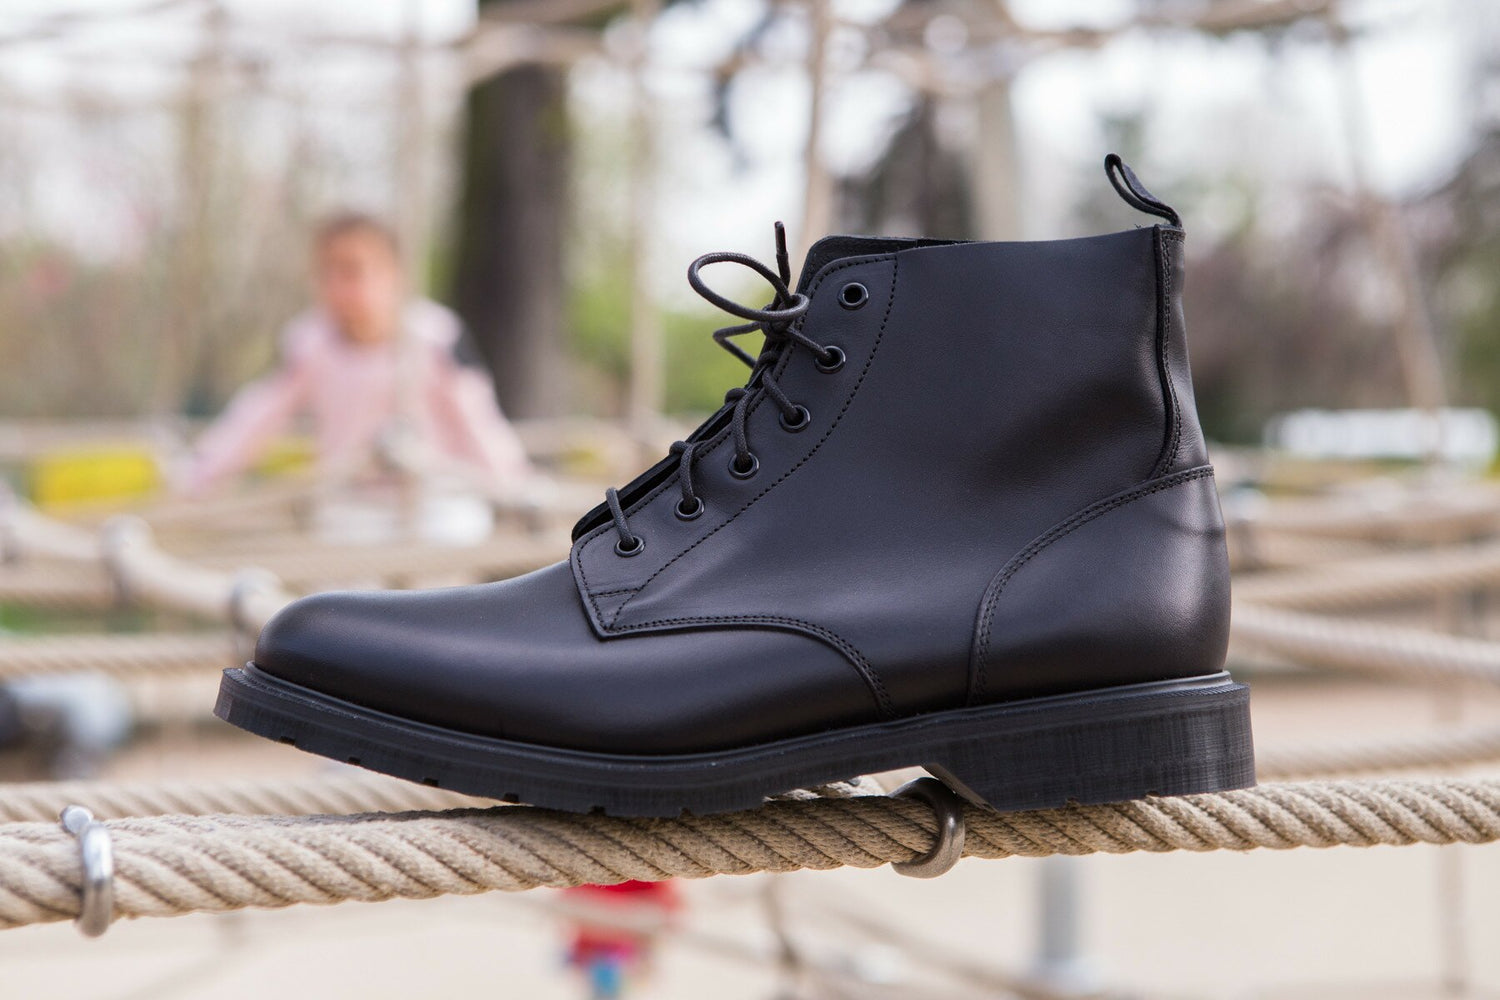 Solovair - Boots premium 951 en cuir noir cousue goodyear semelle coussin d'air